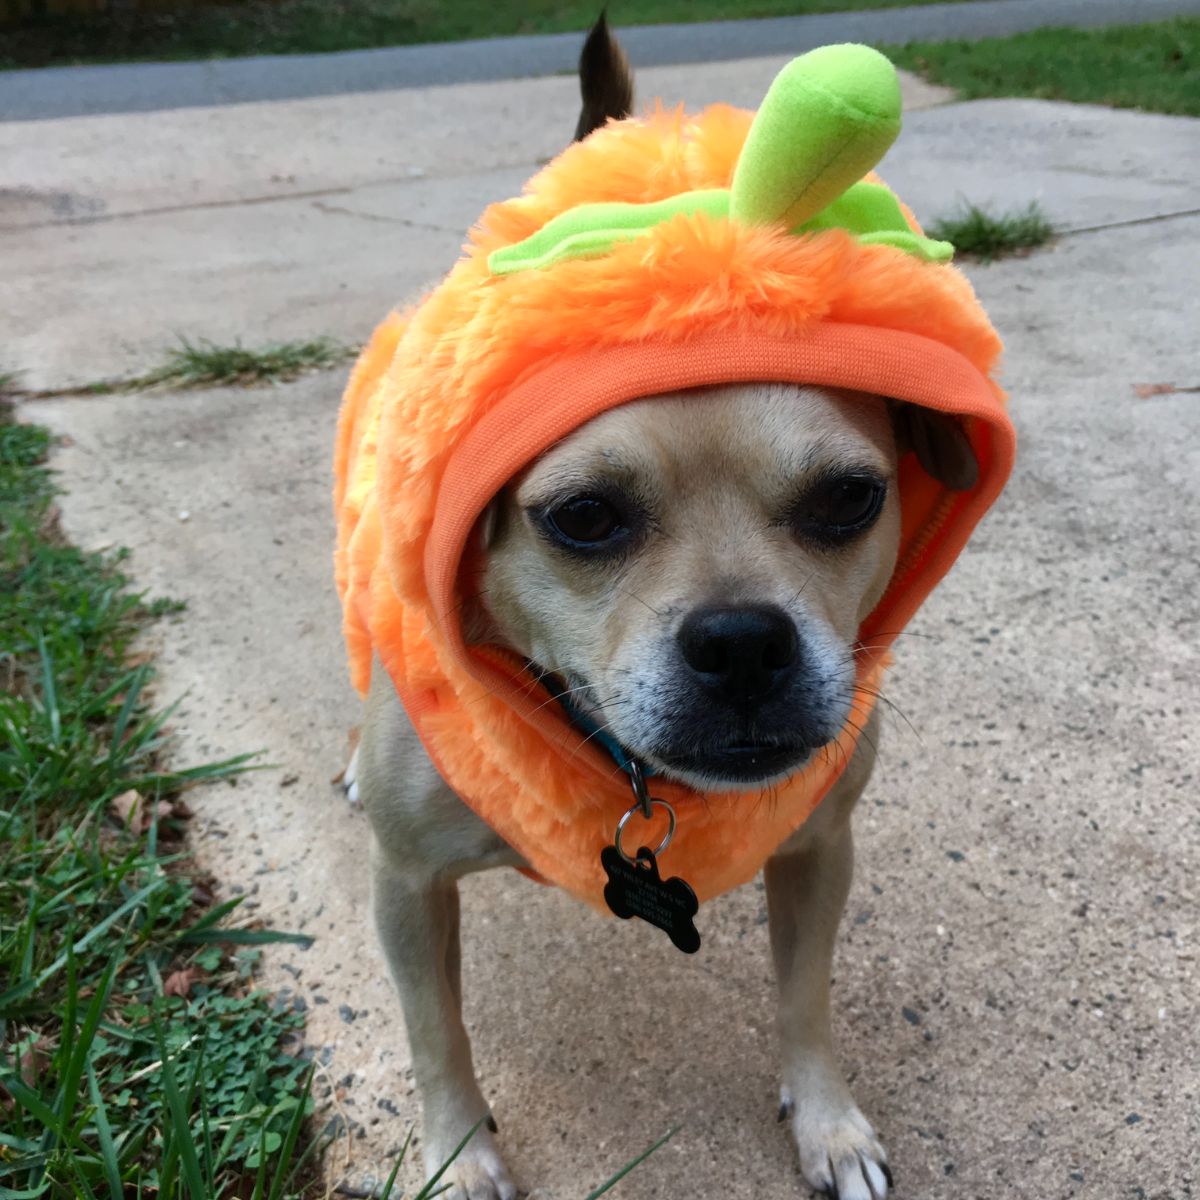 Jasper in a Halloween costume